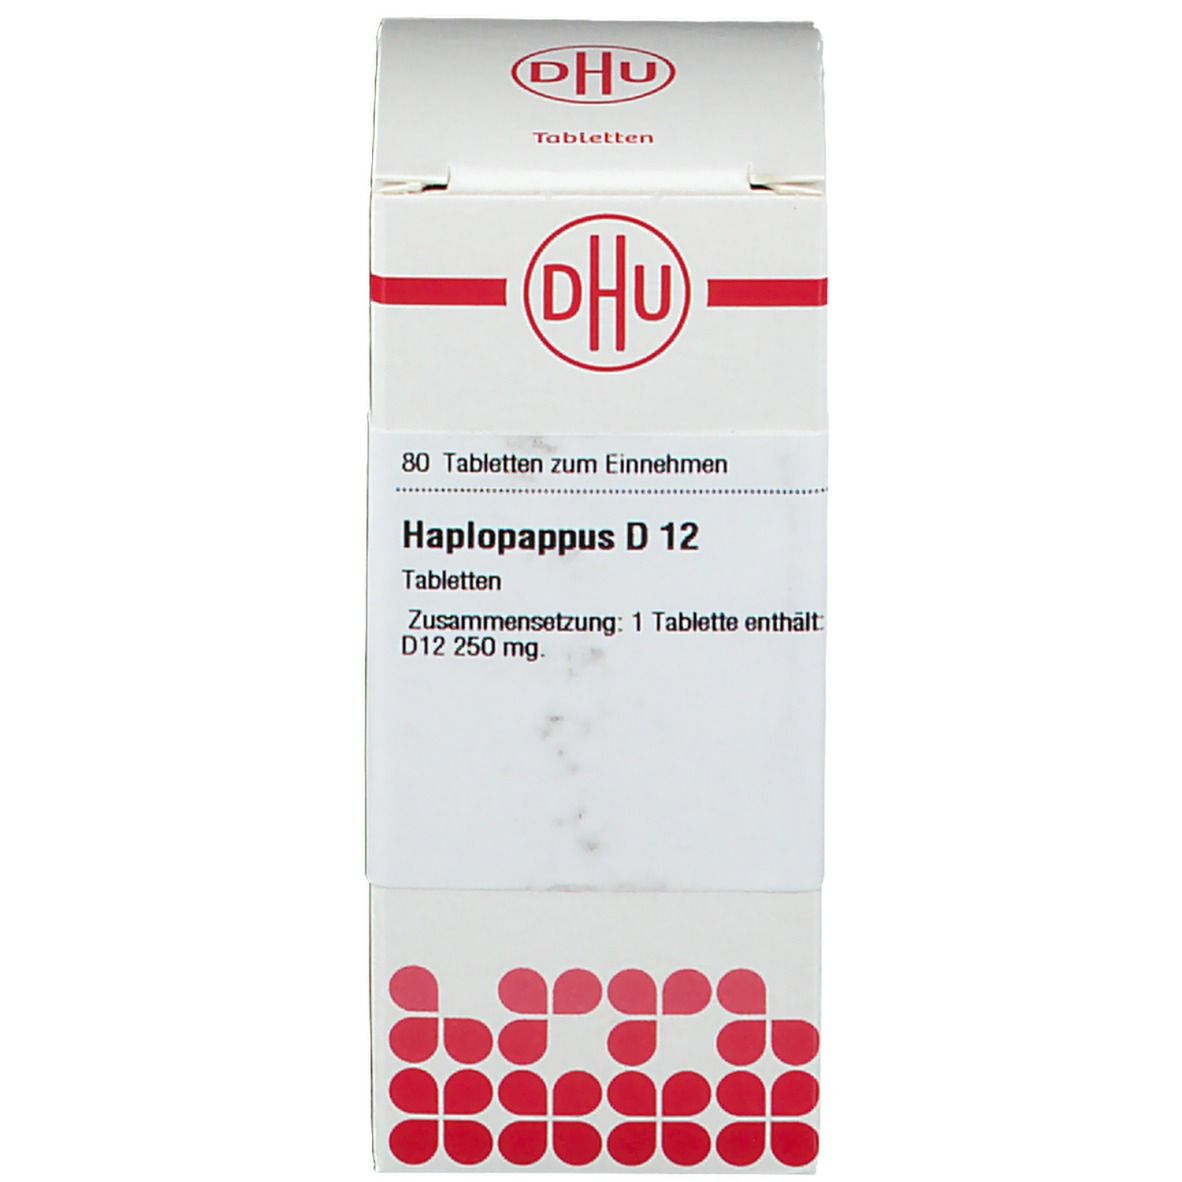 DHU Haplopappus D12